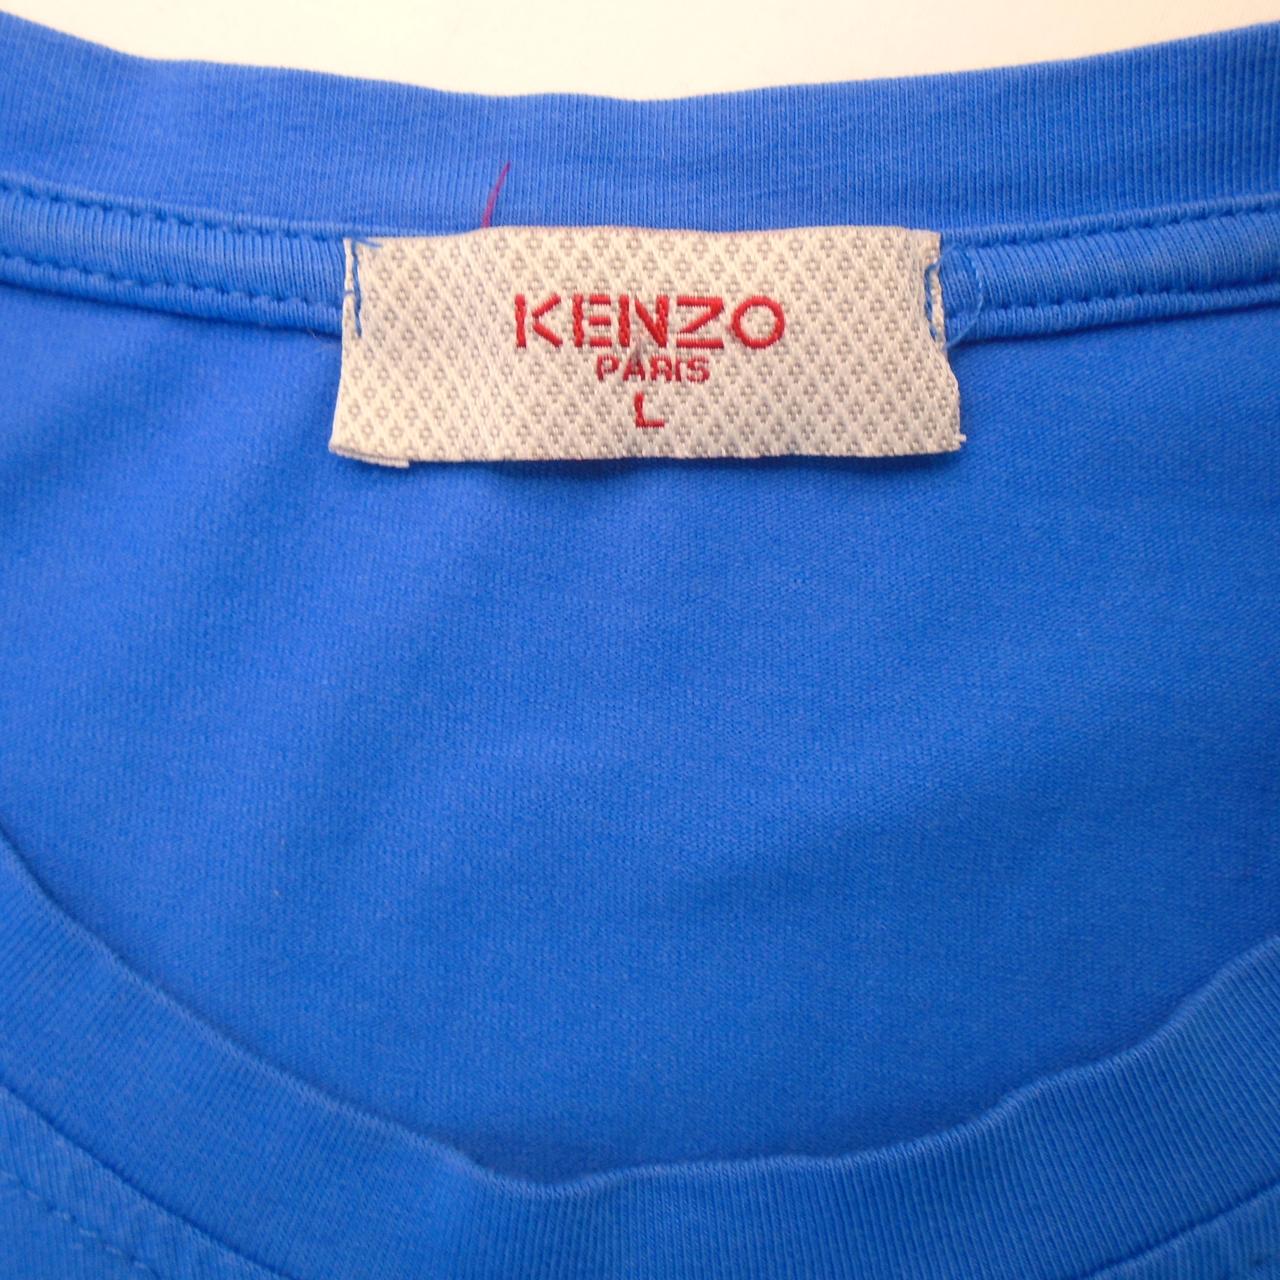 Damen-T-Shirt Kenzo. Blau. L. Gebraucht. Gut